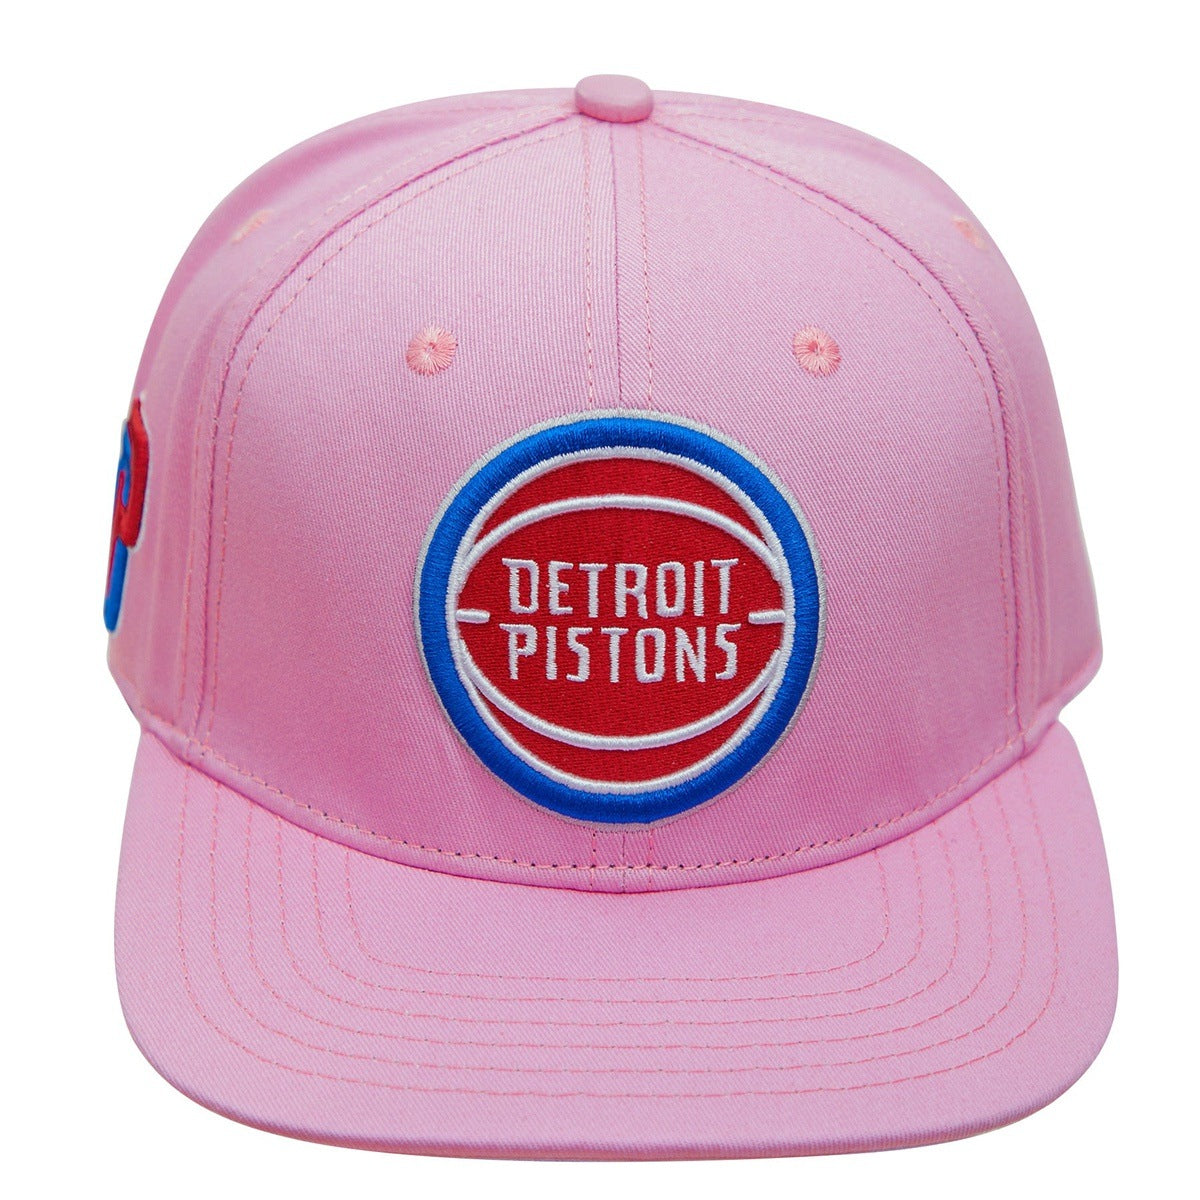 Shop Pro Standard Detroit Pistons Current Logo Snapback BDP750628